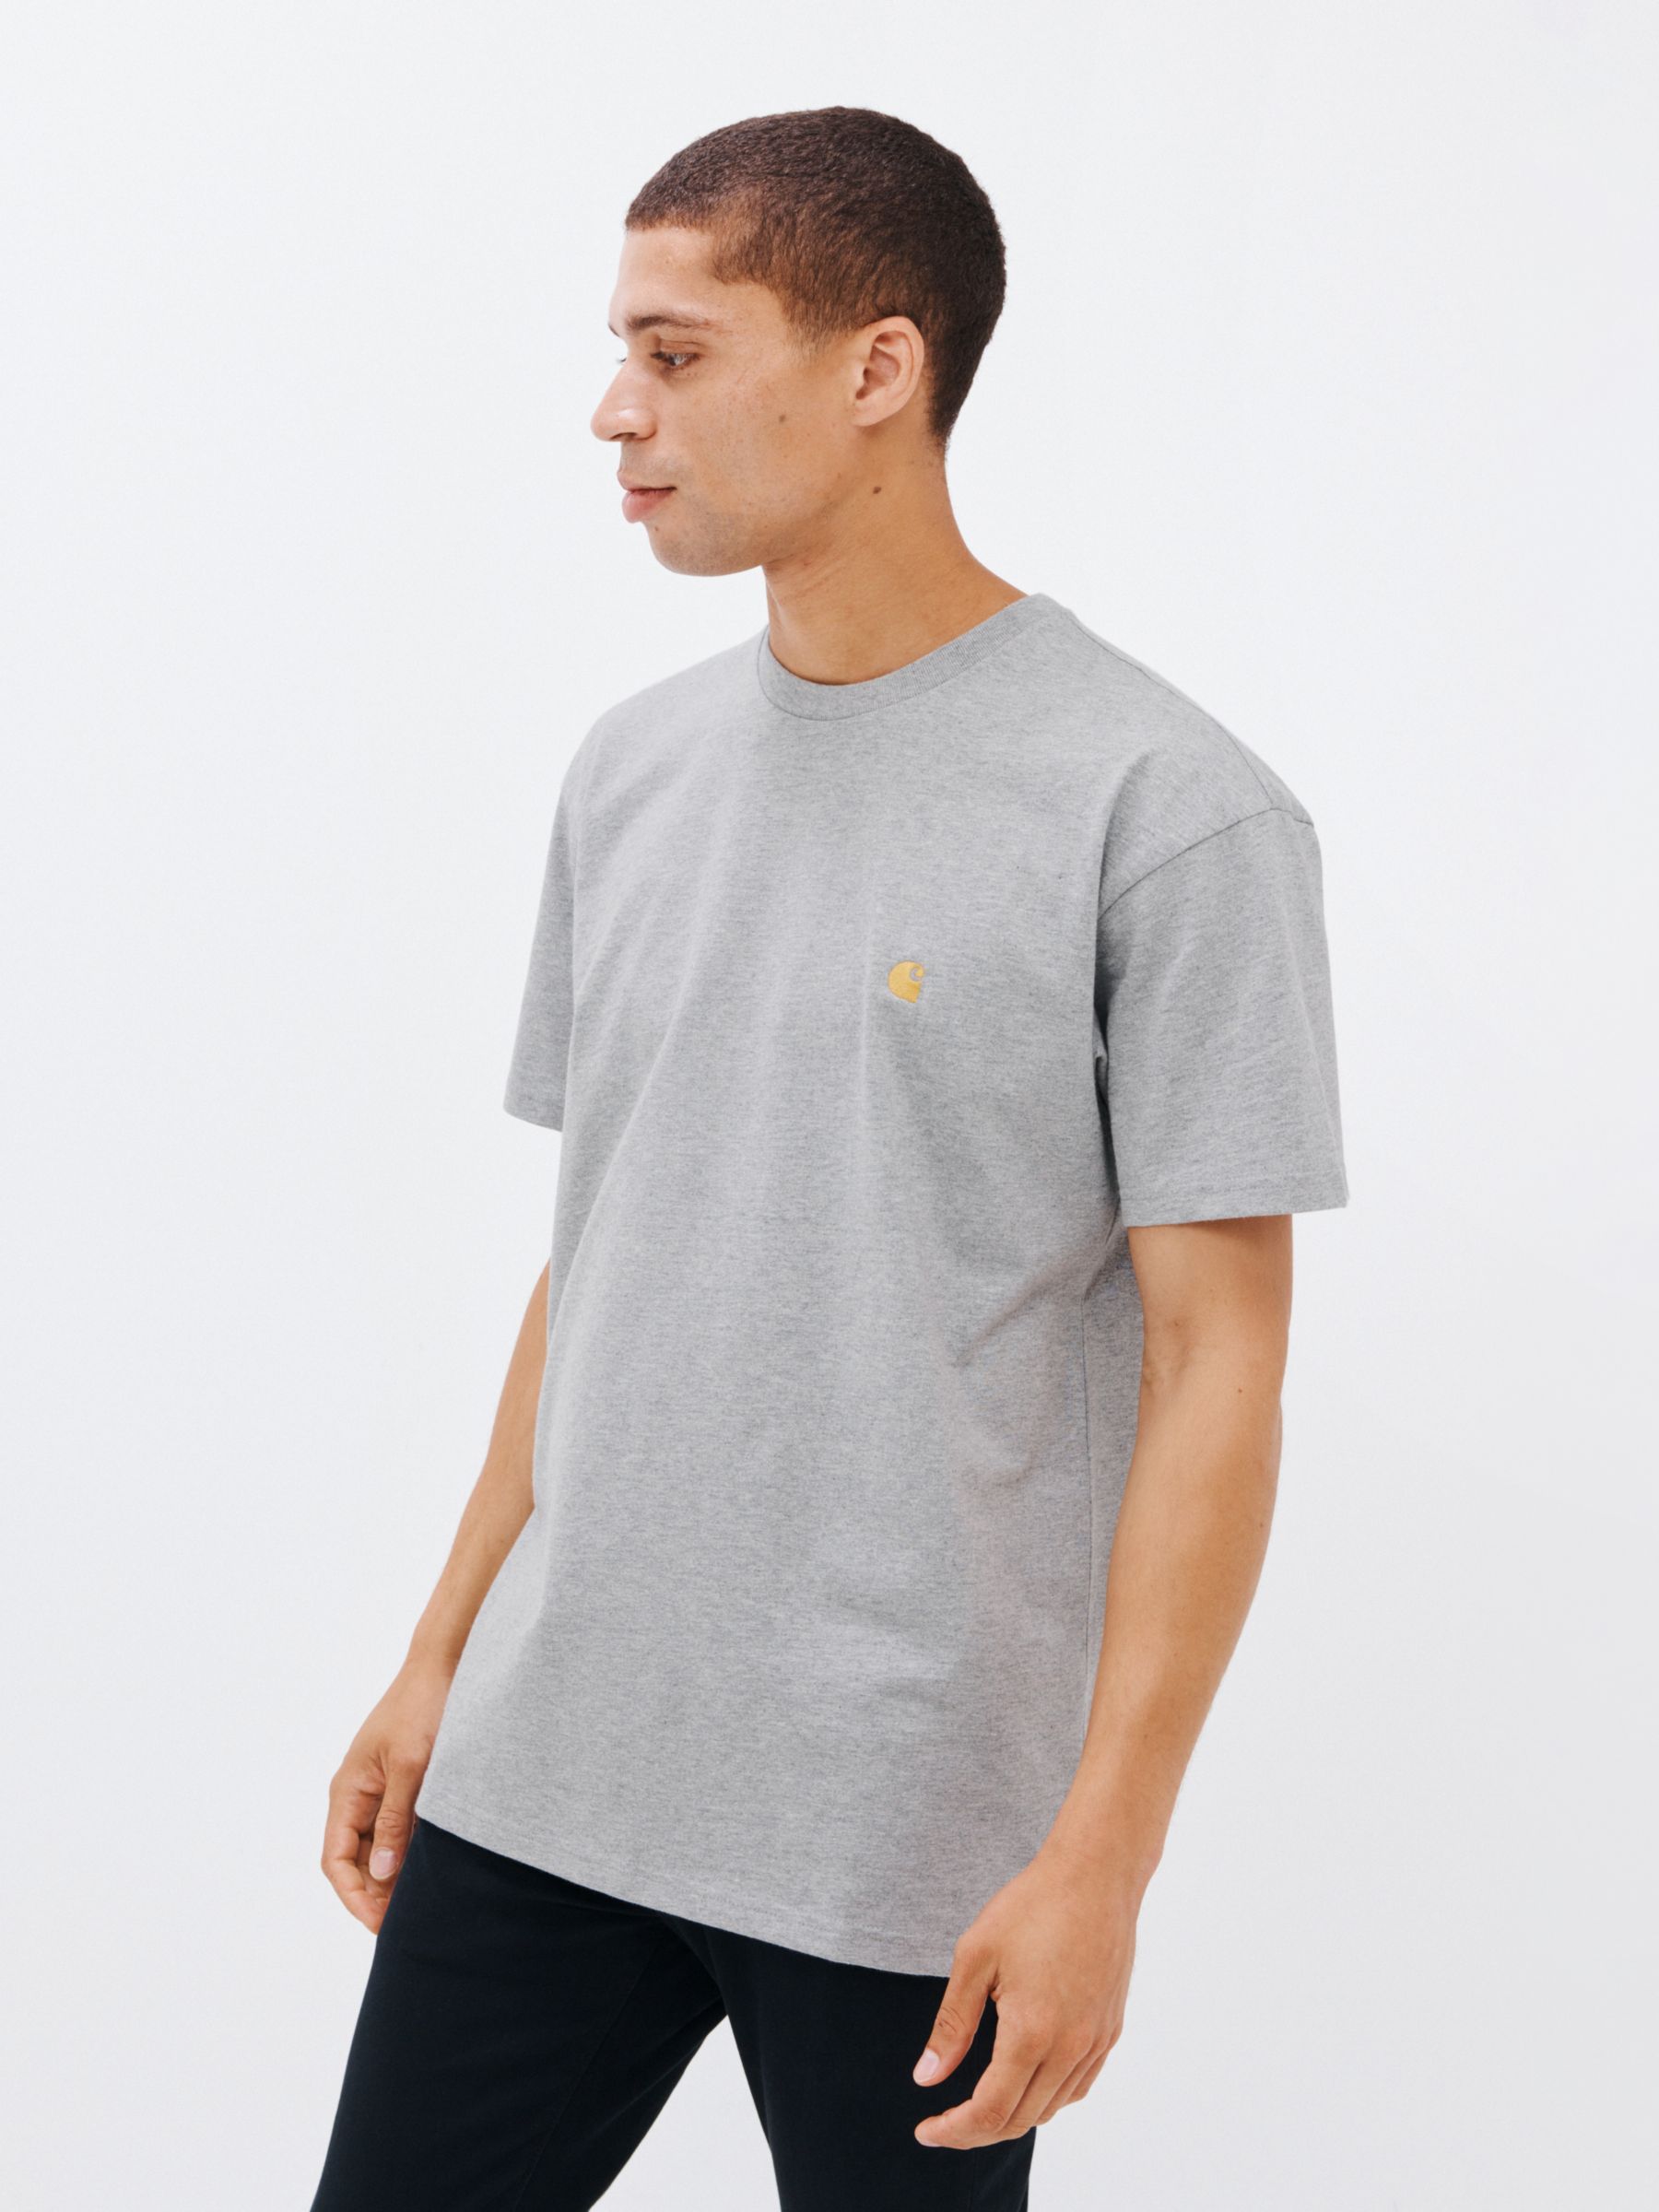 Carhartt WIP Chase Short Sleeve T-Shirt, Grey/Gold, S